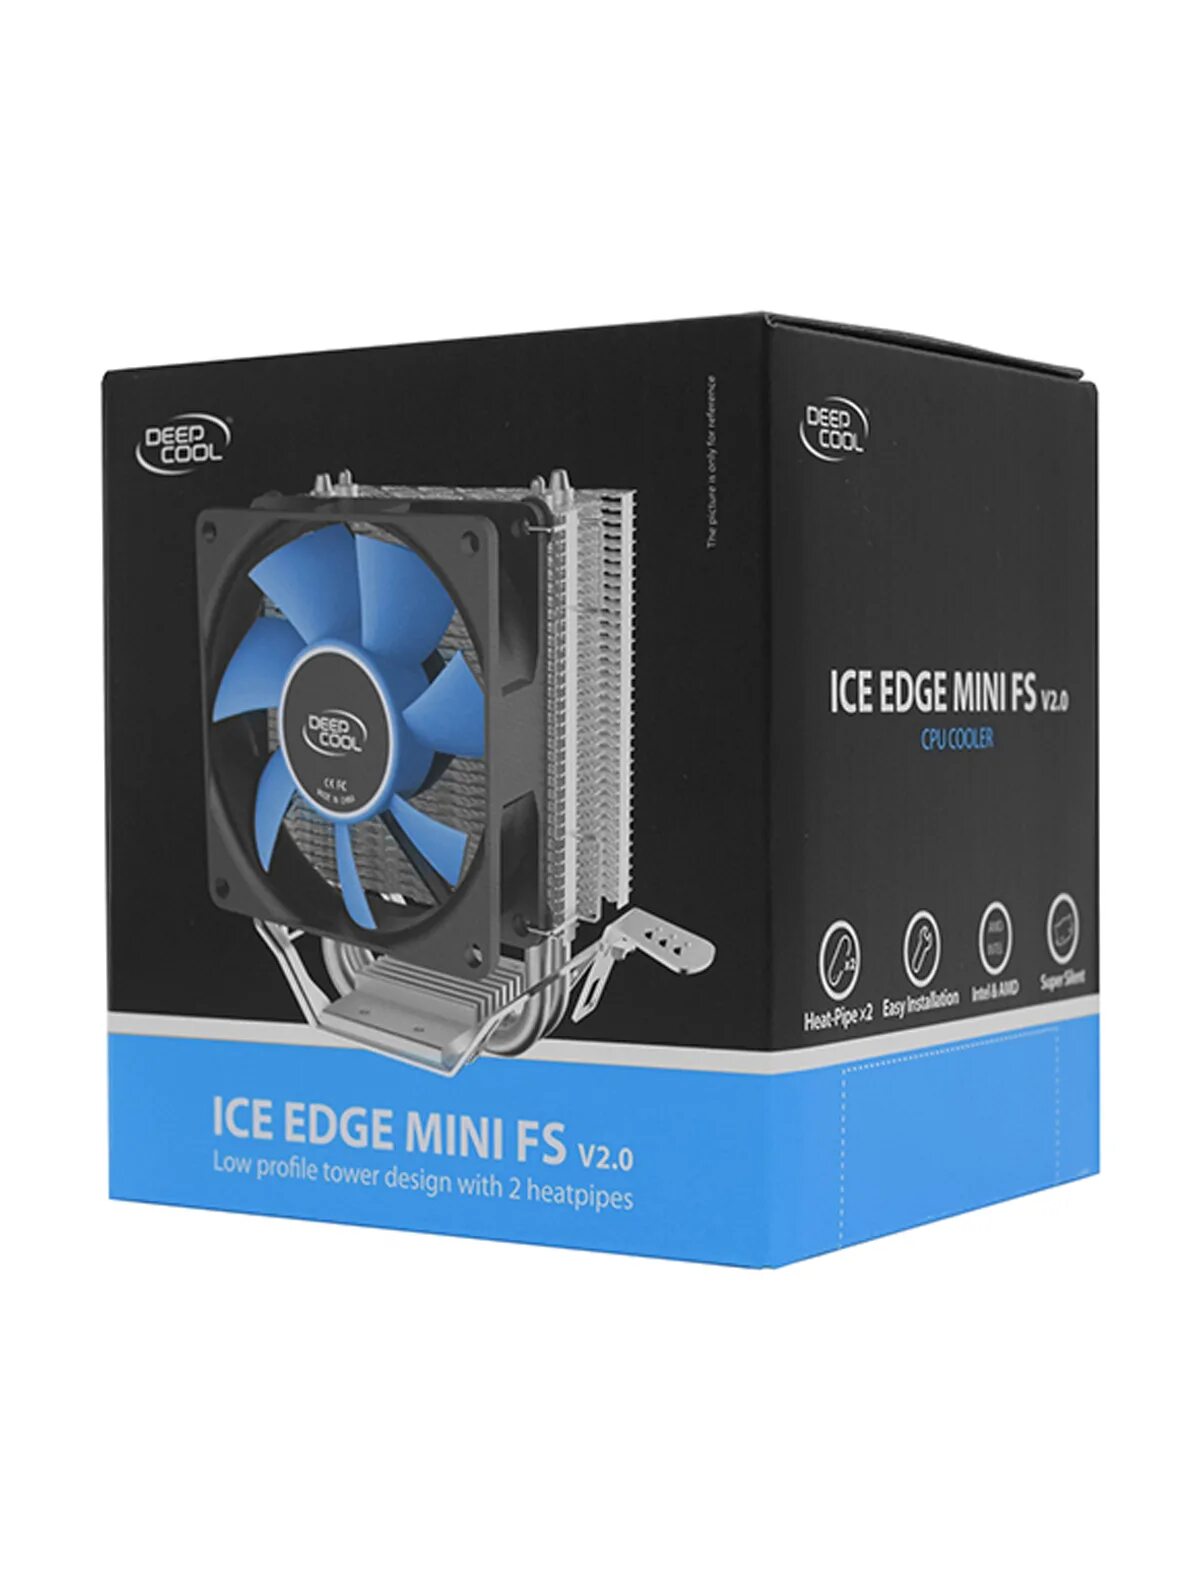 Deepcool edge mini v 2.0. Кулер Ice Edge Mini fs2. Deepcool Ice Edge Mini FS 2.0. Deepcool Ice Edge Mini FS V2.0. Ice Edge Mini FS V2.0 коробка.